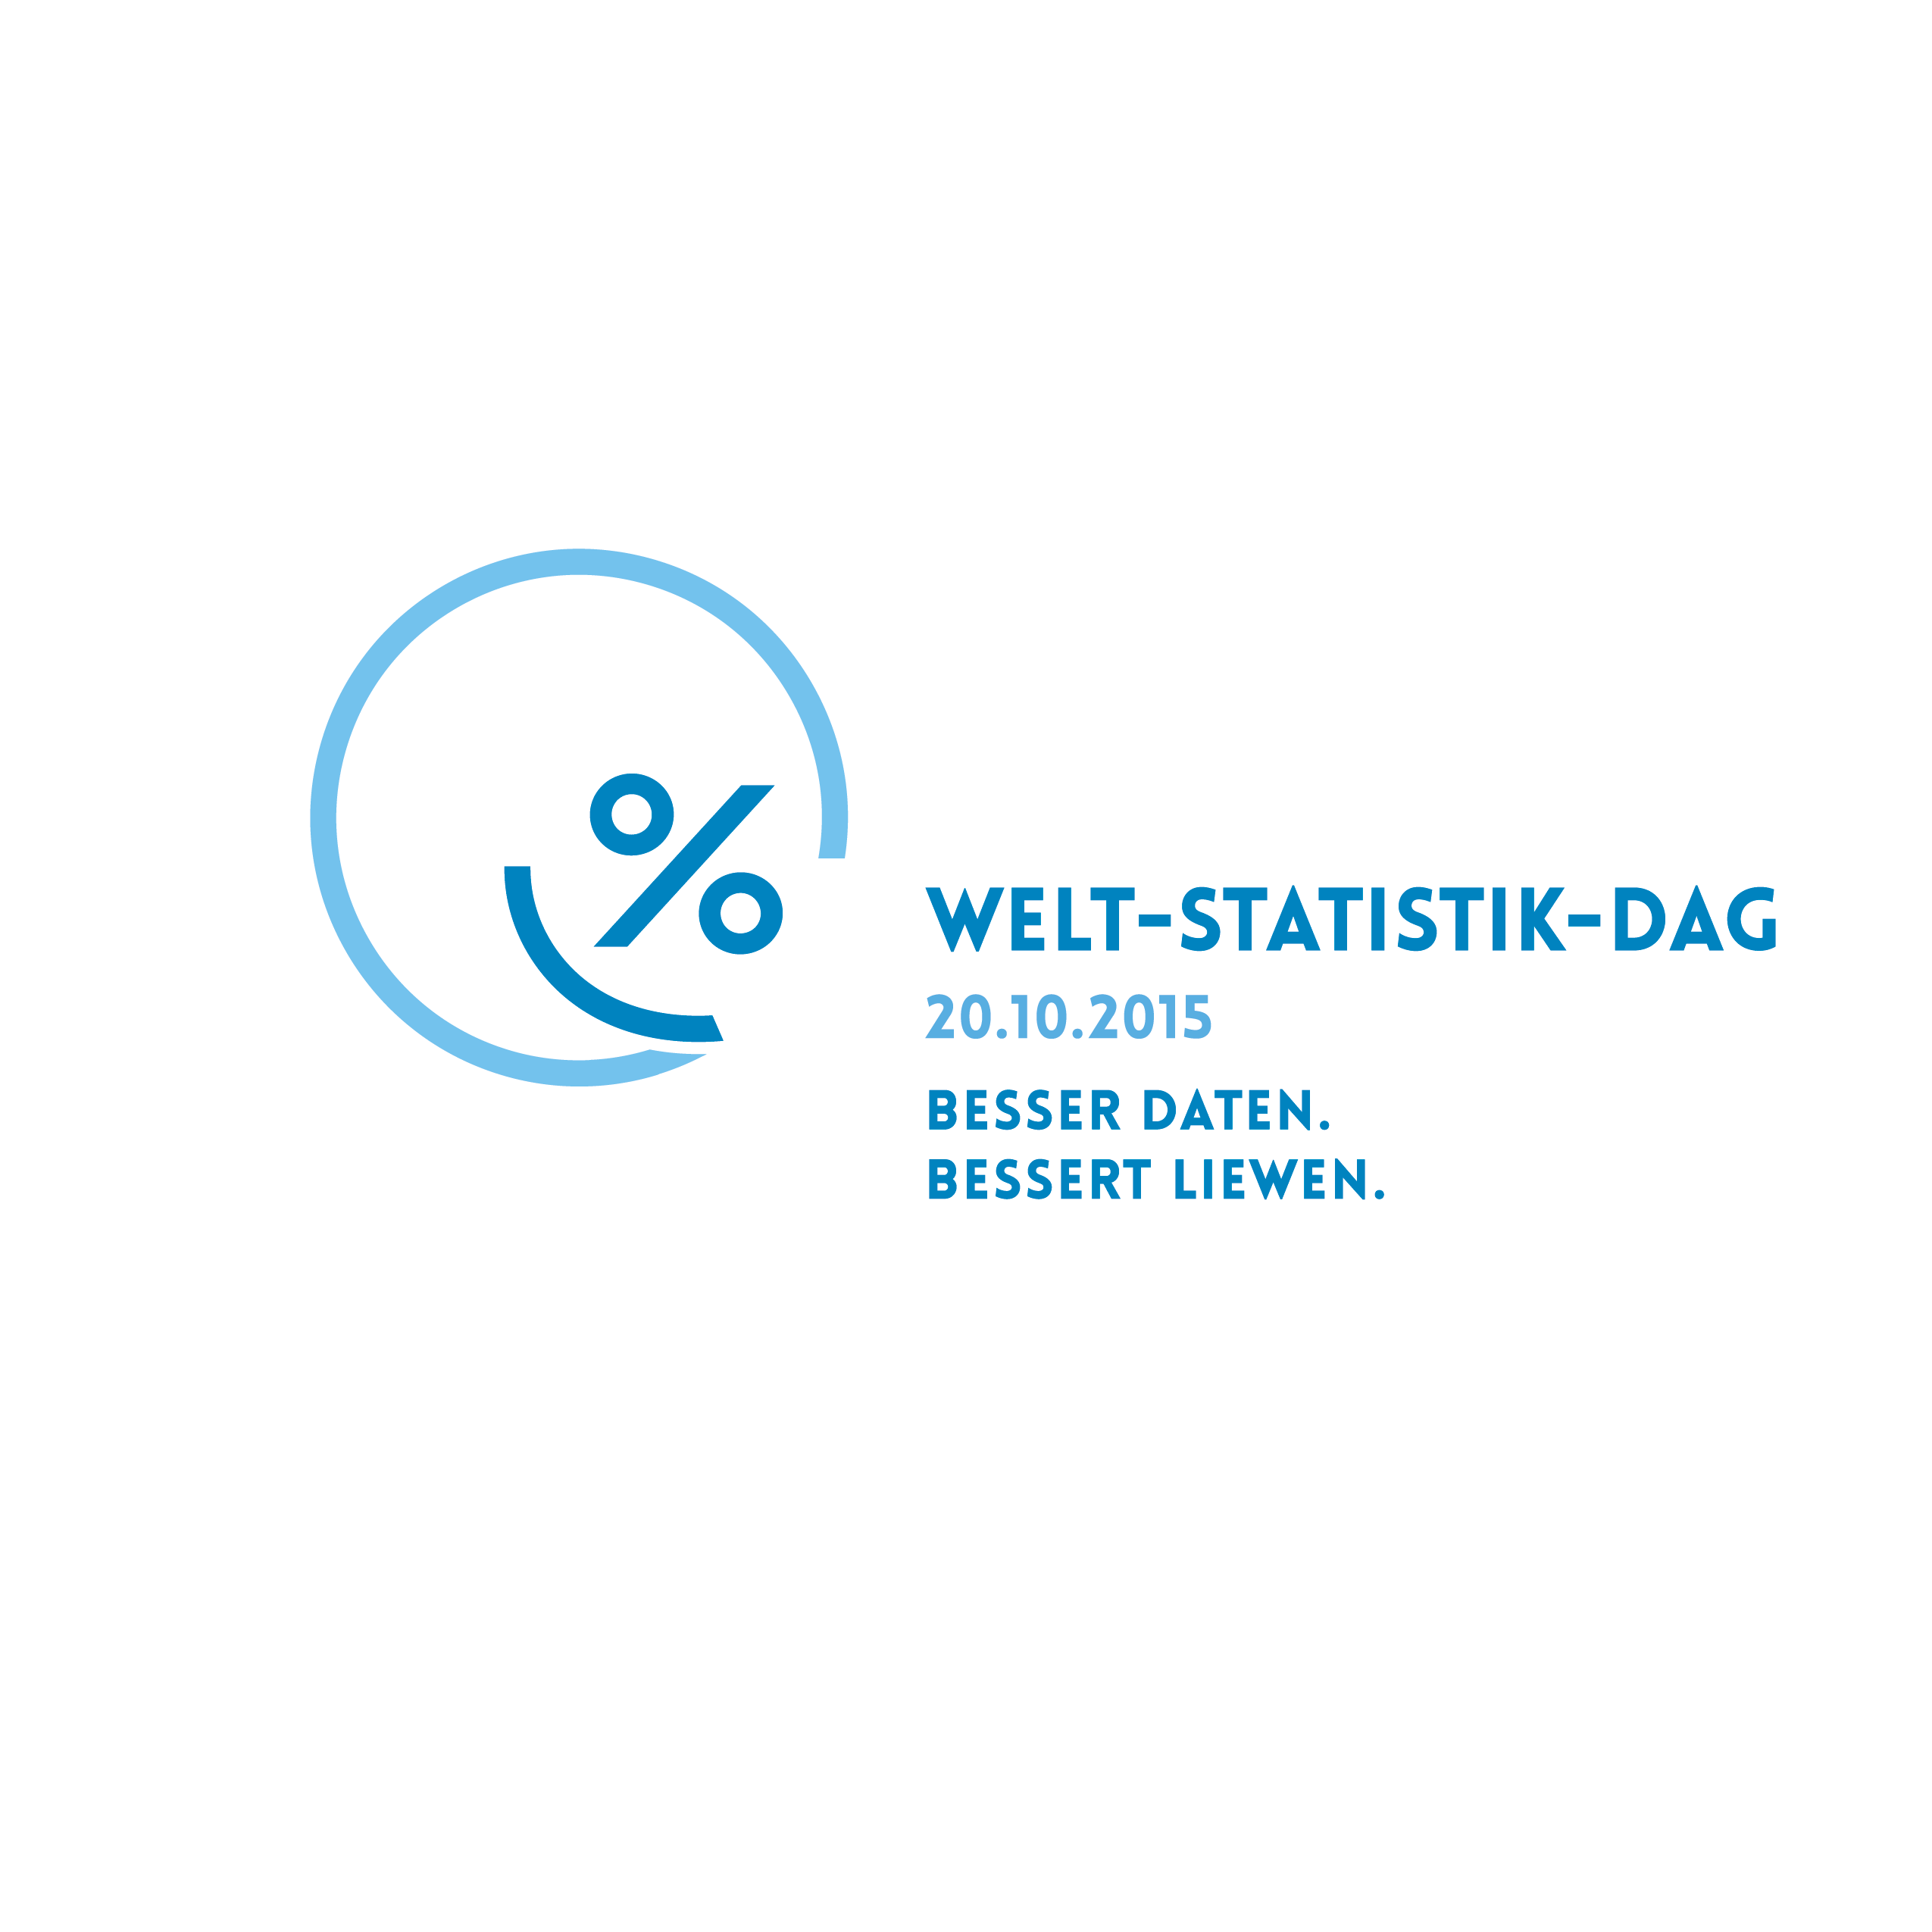 World Statistics Day Logo in Luxembourgish